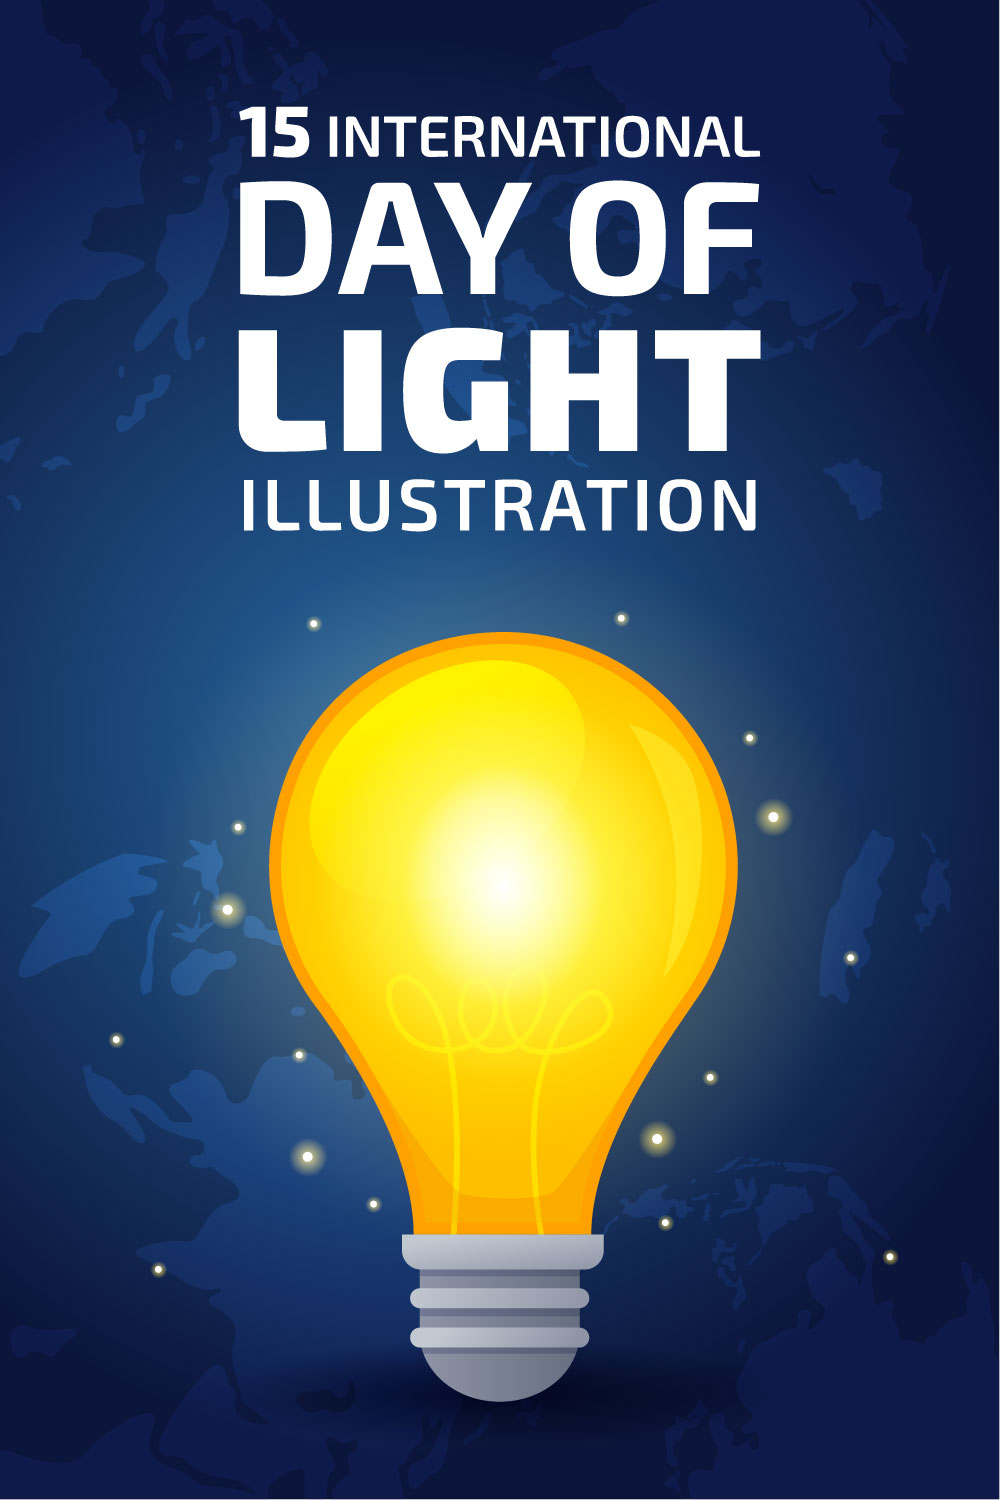 15 International Day of Light Illustration pinterest preview image.